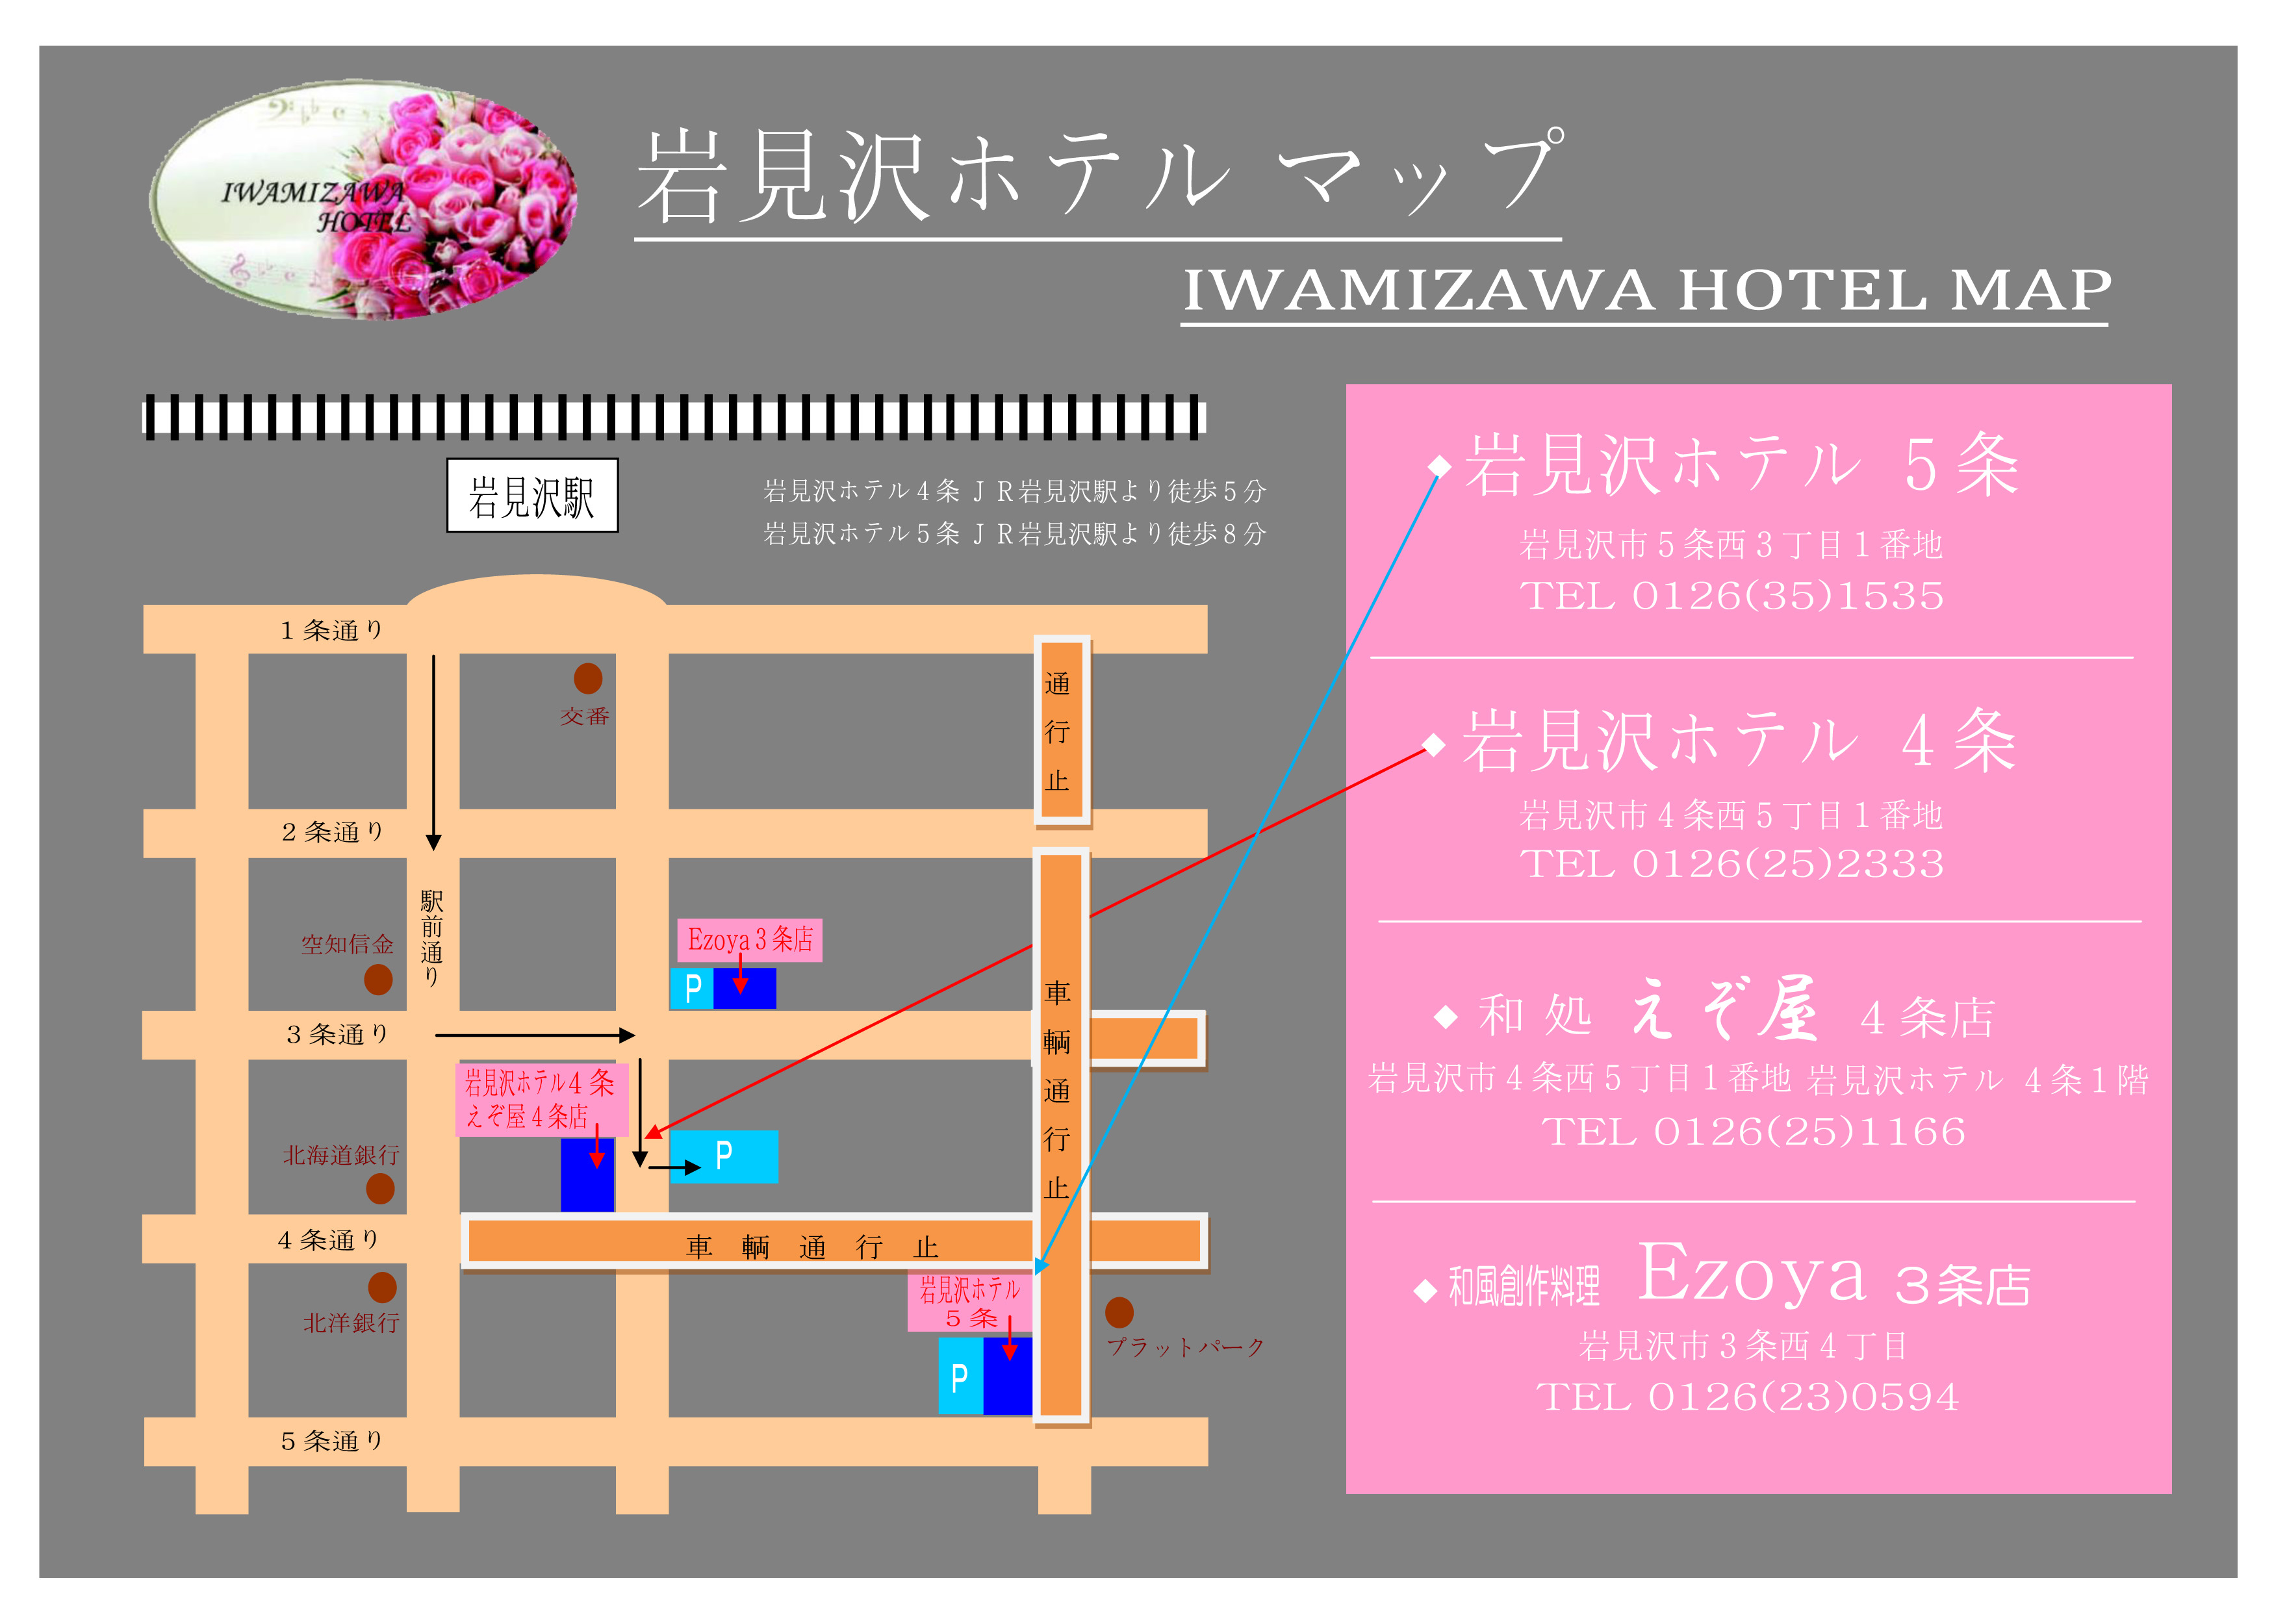 http://iwamizawa-hotel.com/4jou/news/uploads/4%E6%9D%A1%E8%BB%8A%E8%BC%8C%E8%A6%8F%E5%88%B6.jpg